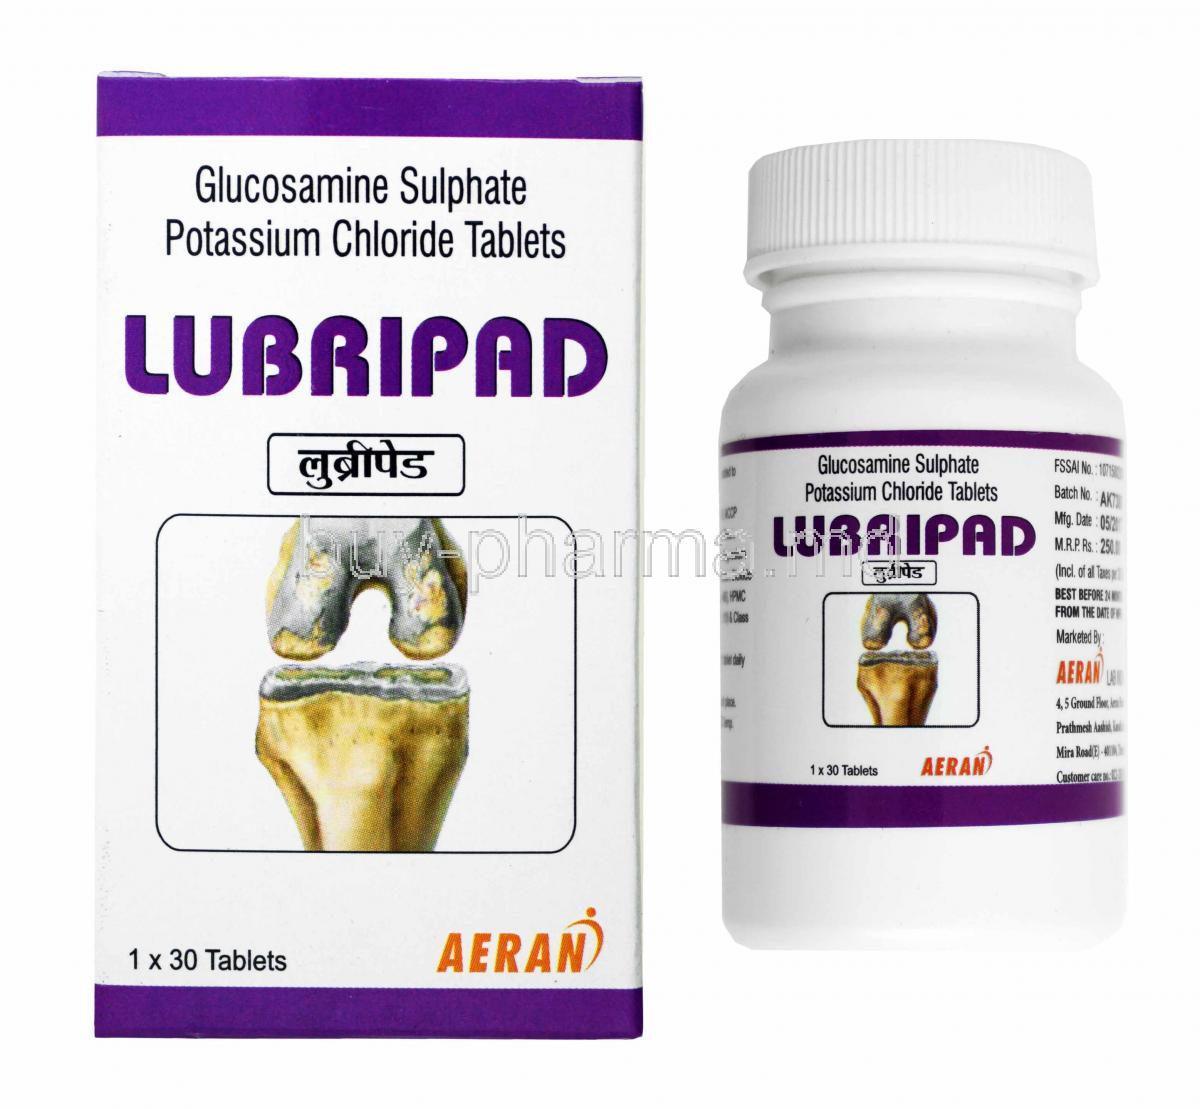 Lubripad, Glucosamine 500mg box and tablet bottle